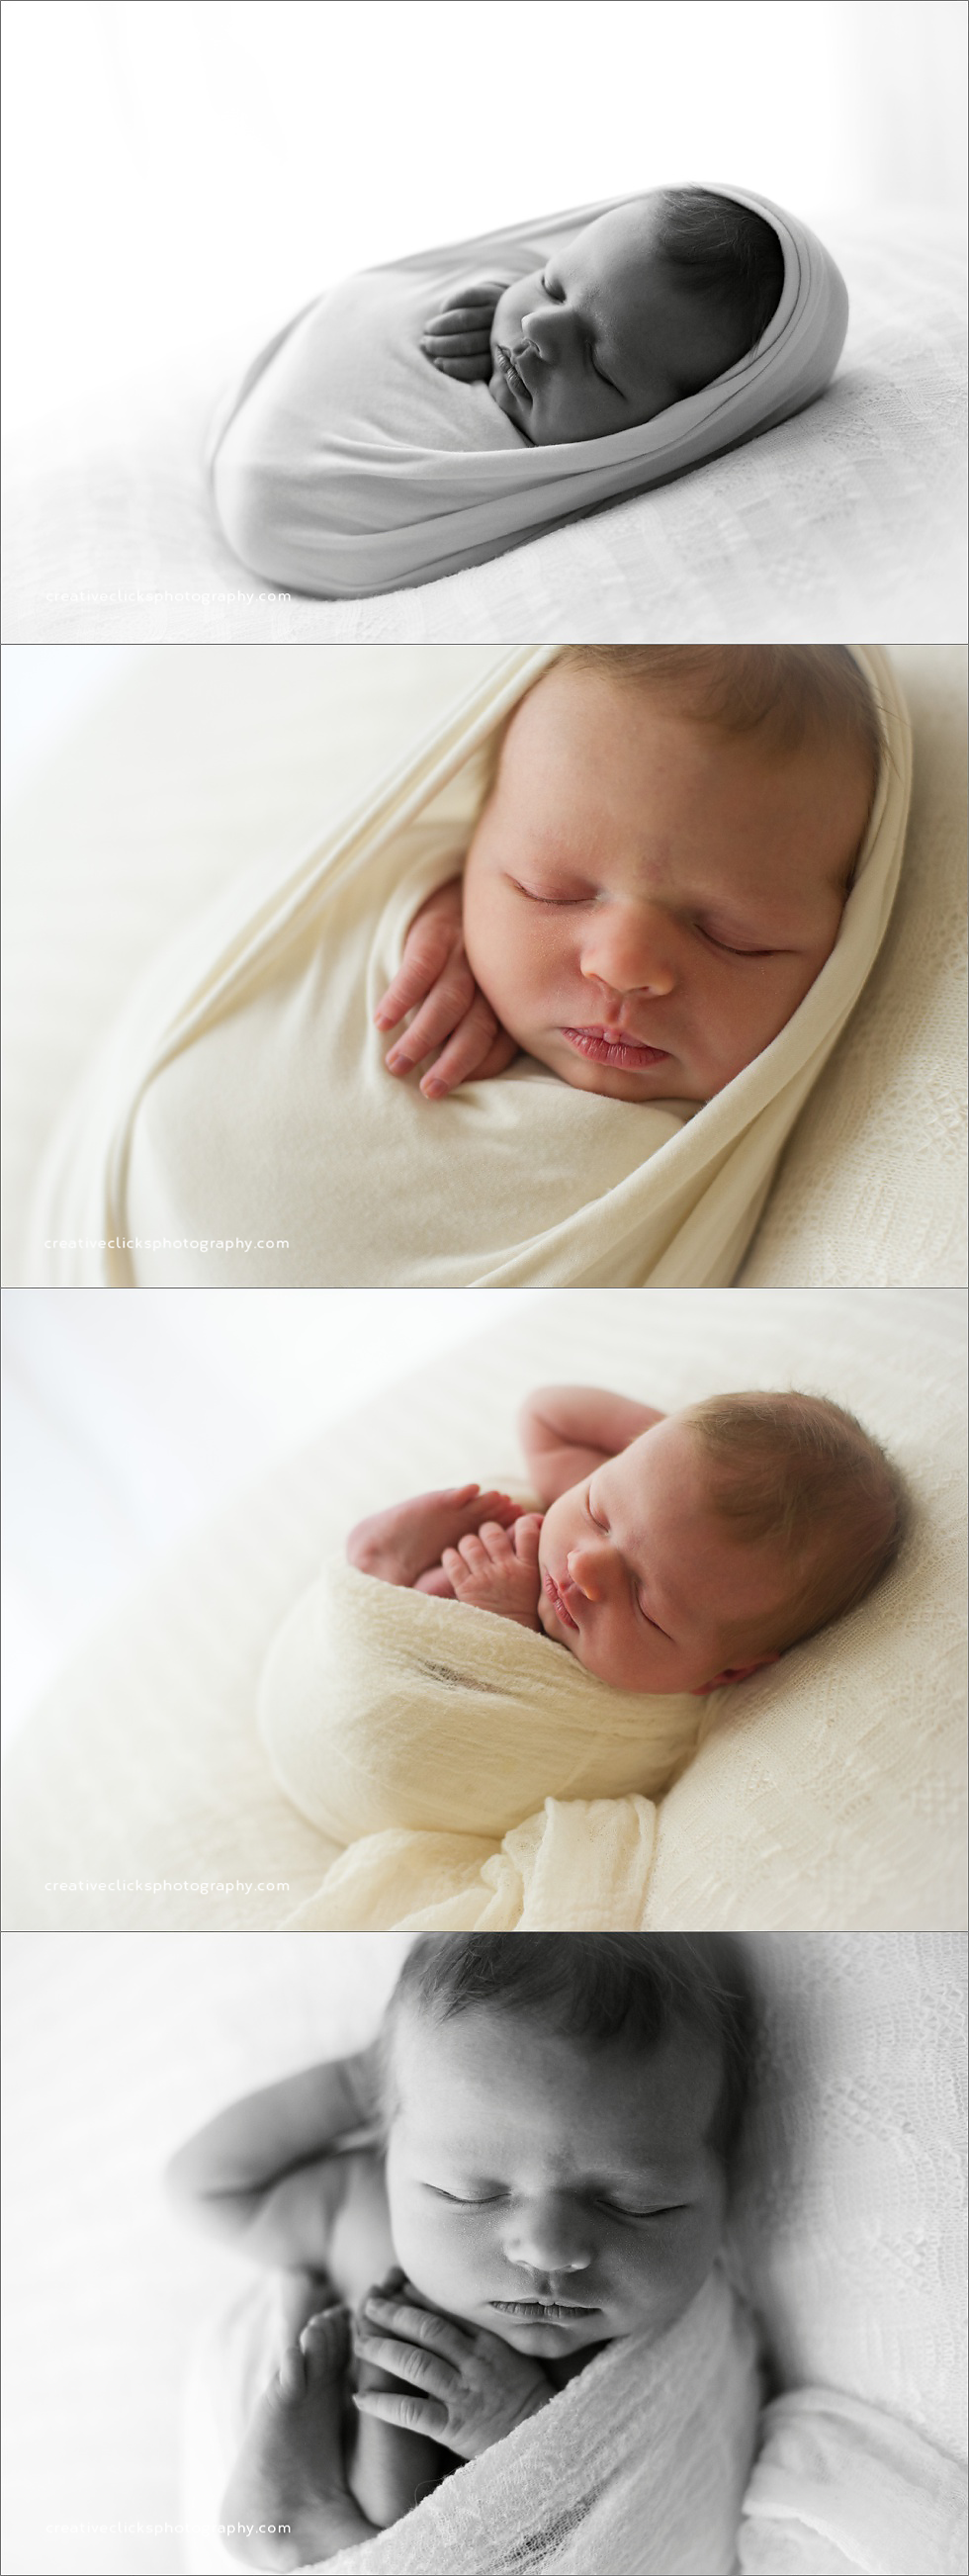 niagara newborn baby photographer baby wrapped